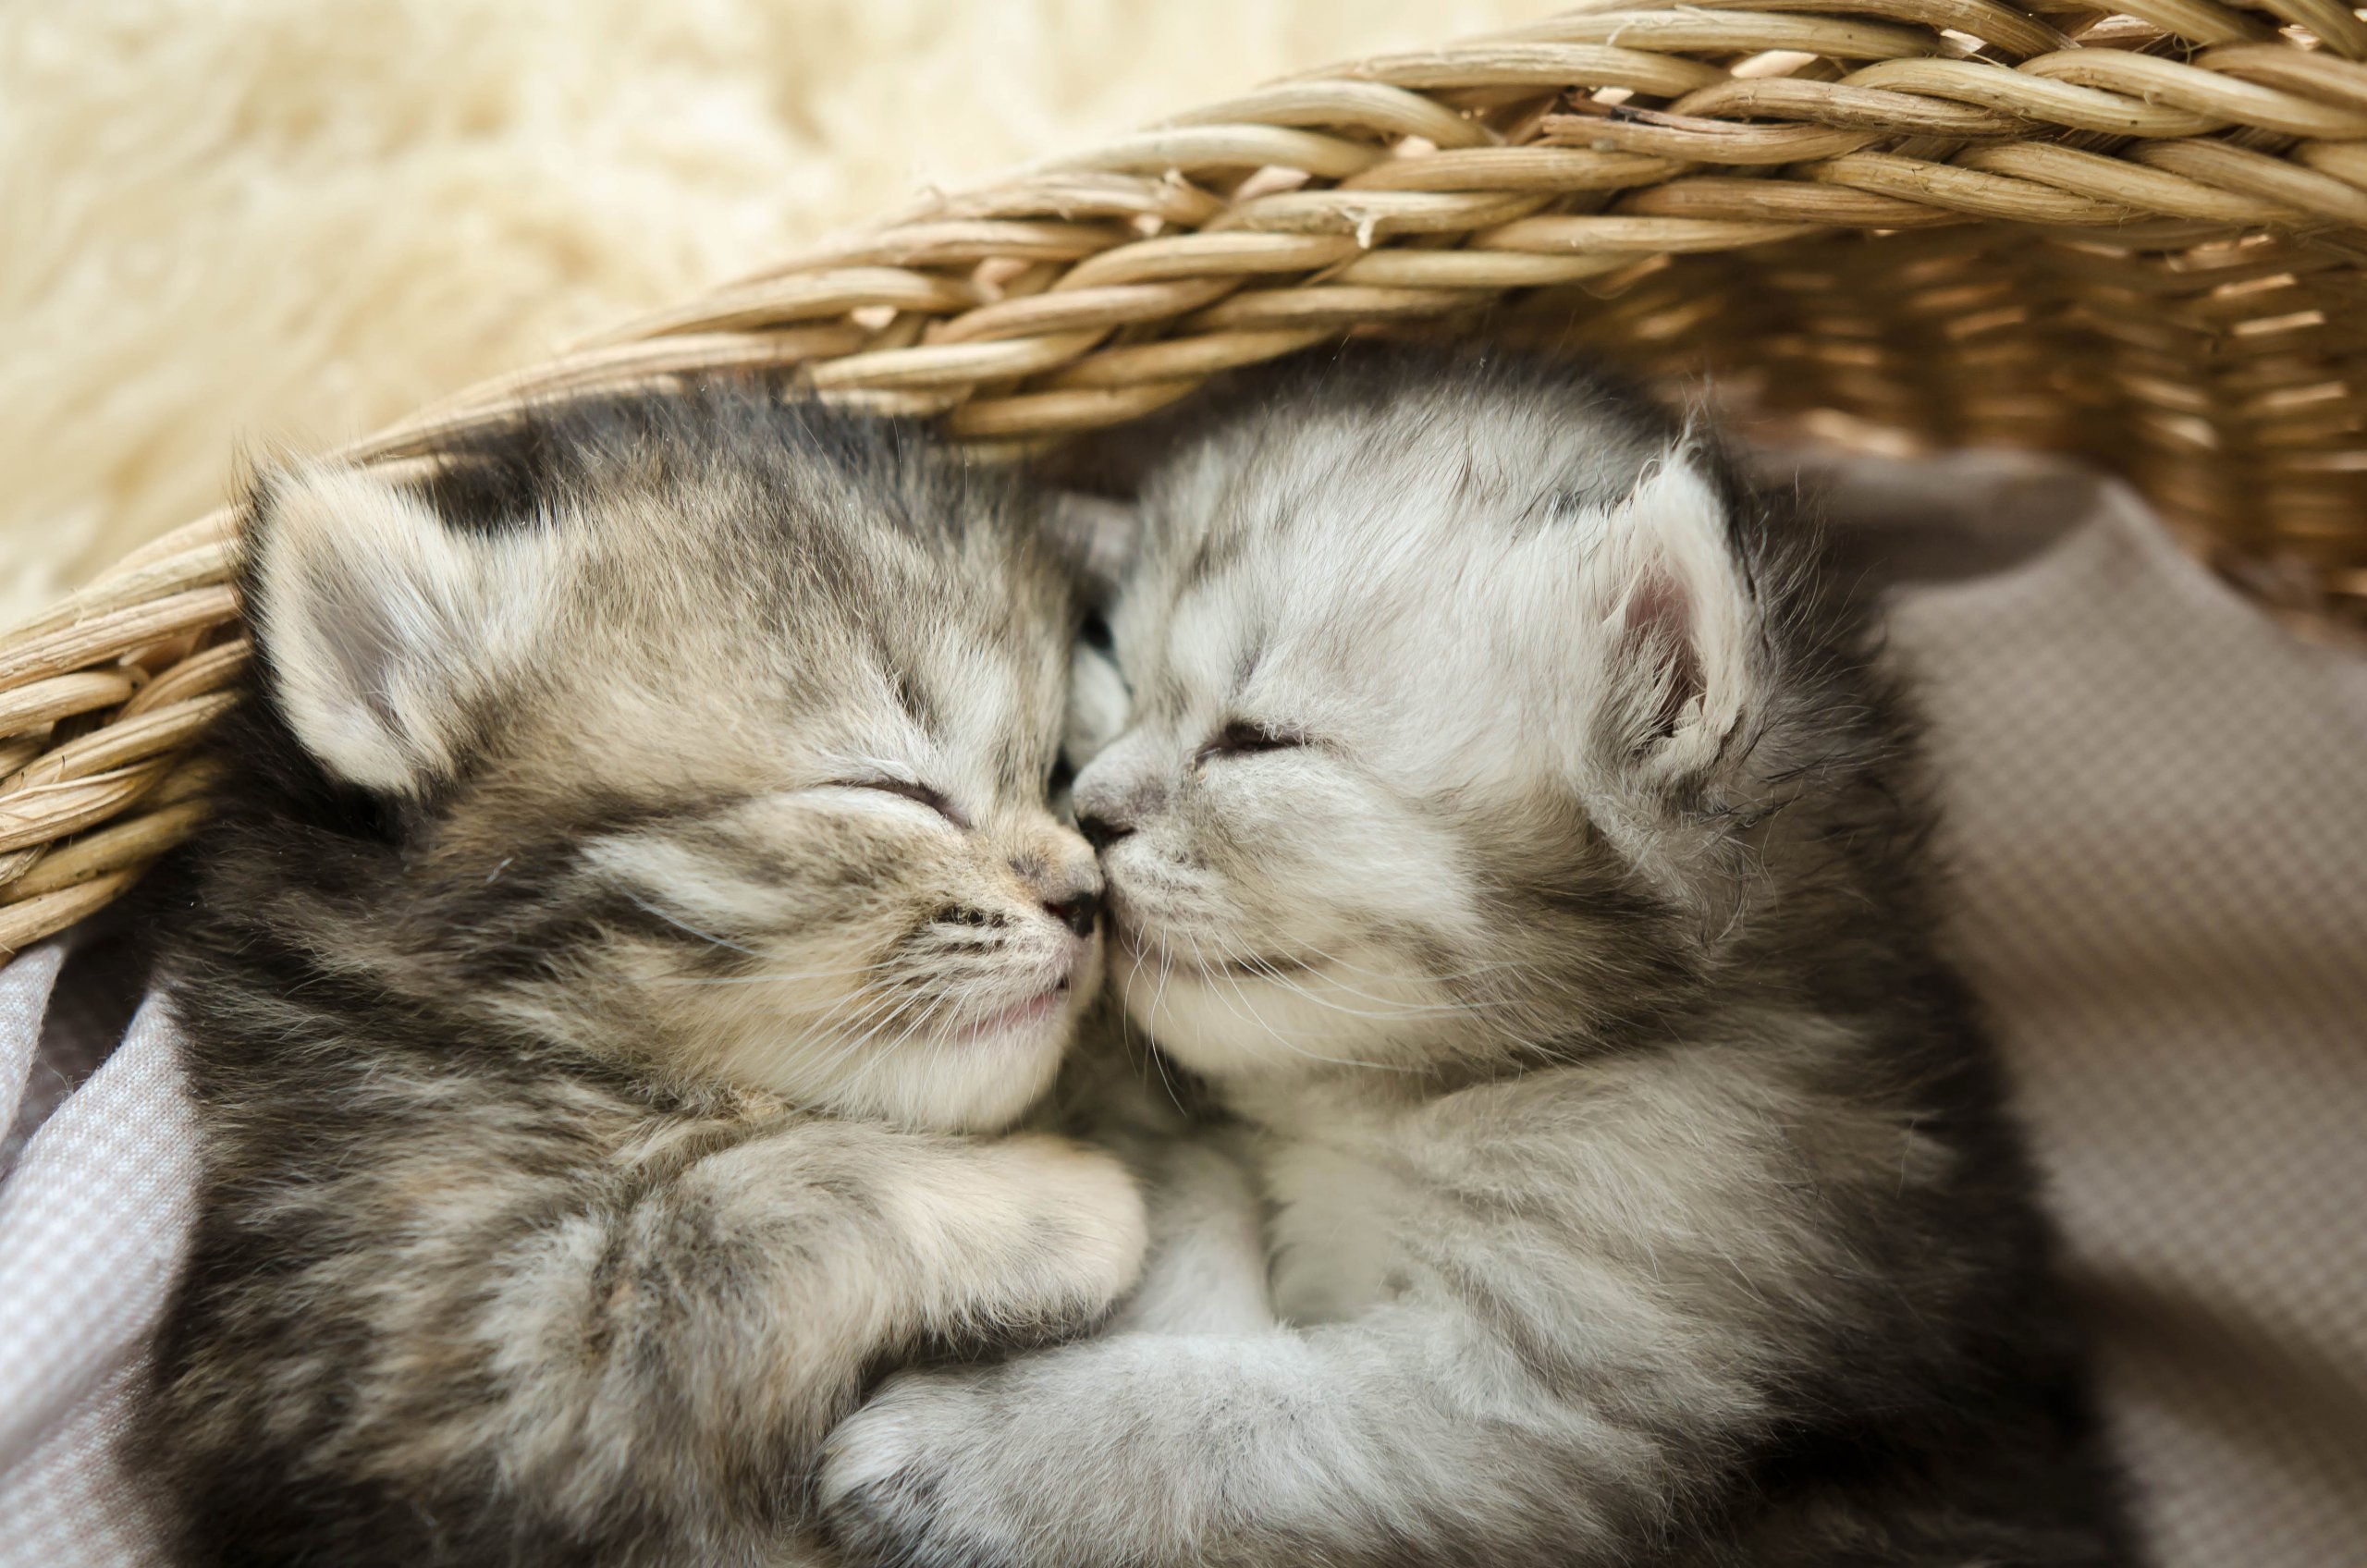 Cute tabby kittens